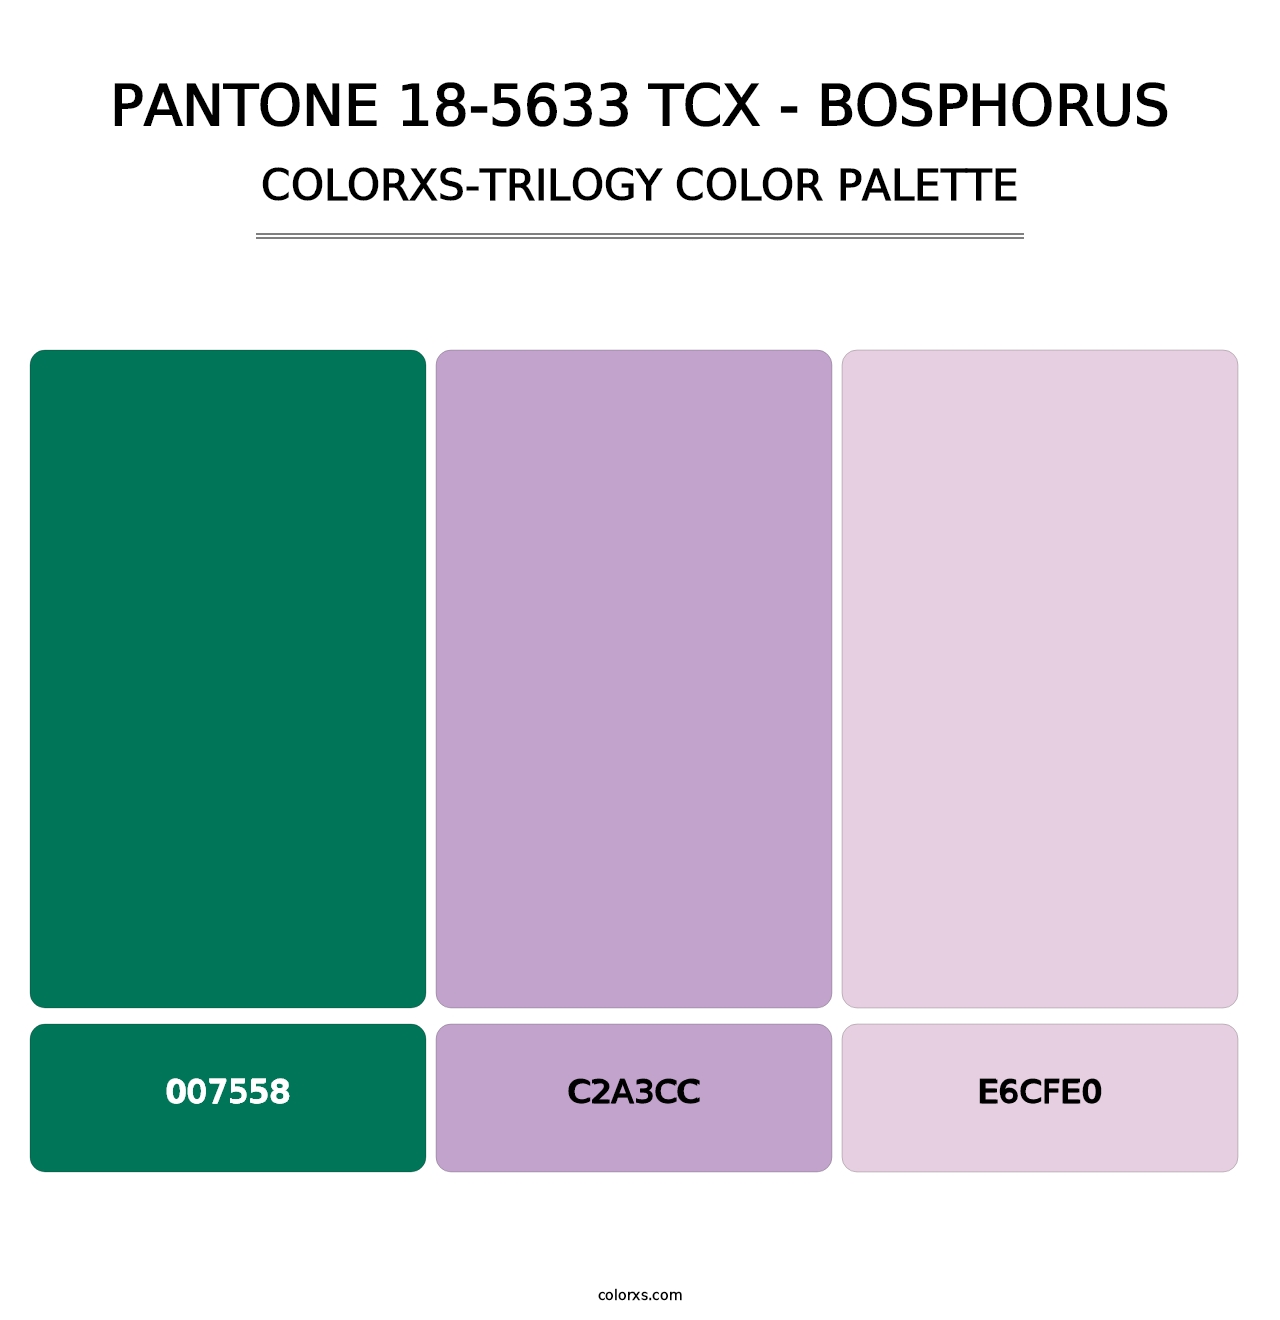 PANTONE 18-5633 TCX - Bosphorus - Colorxs Trilogy Palette